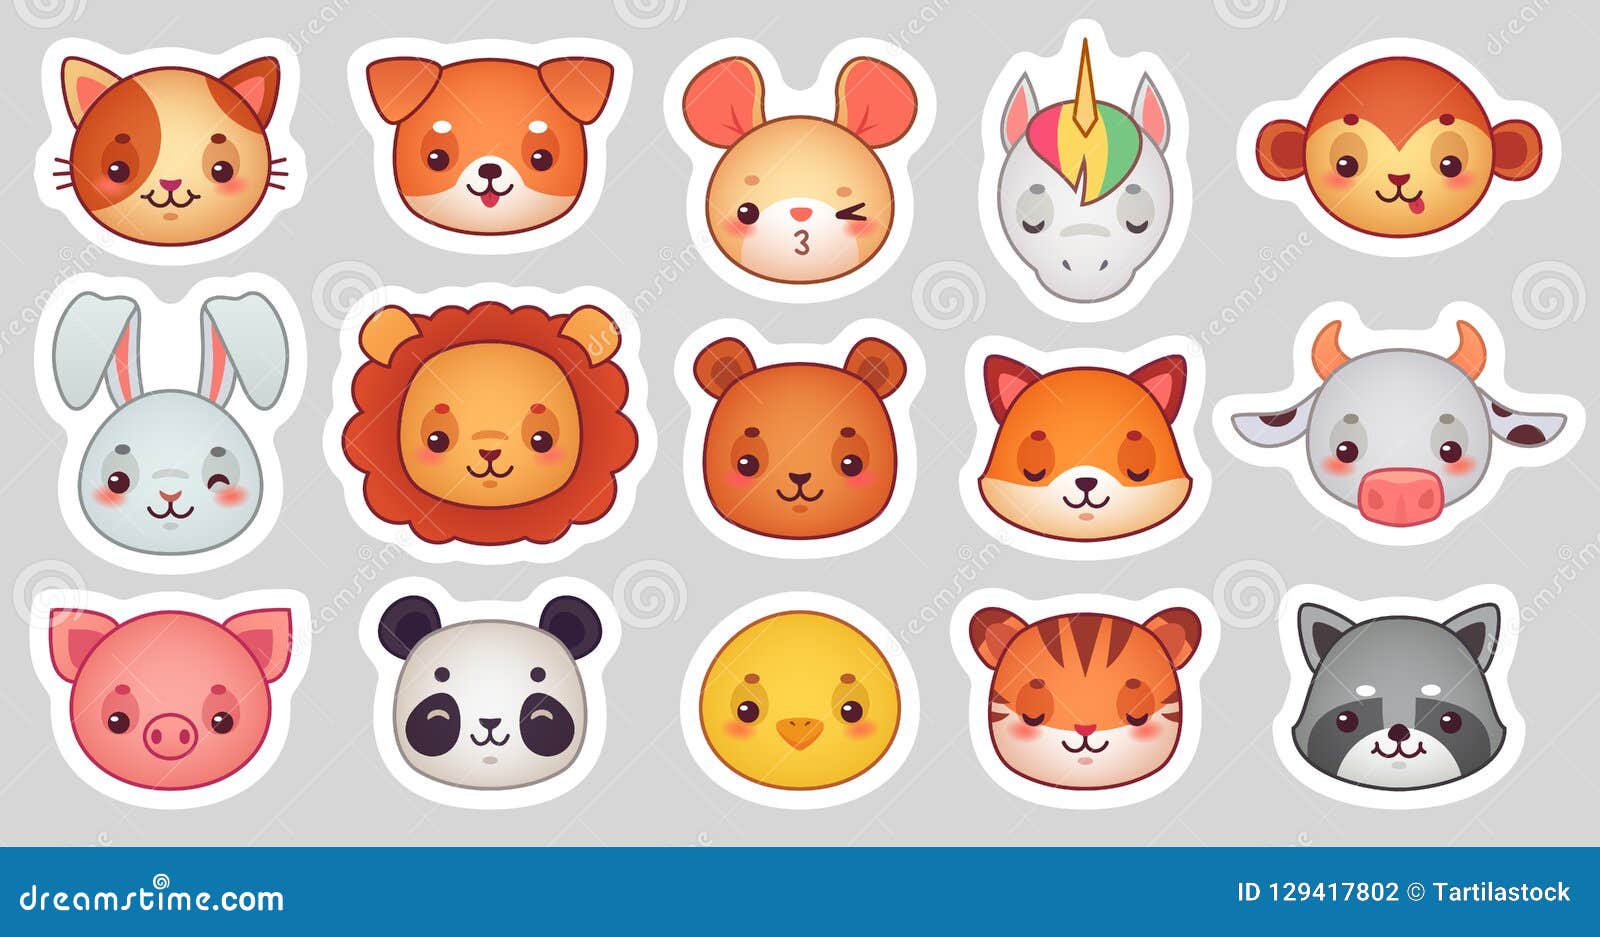 animals face stickers. cute animal faces, kawaii funny emoji sticker or avatar. cartoon   set